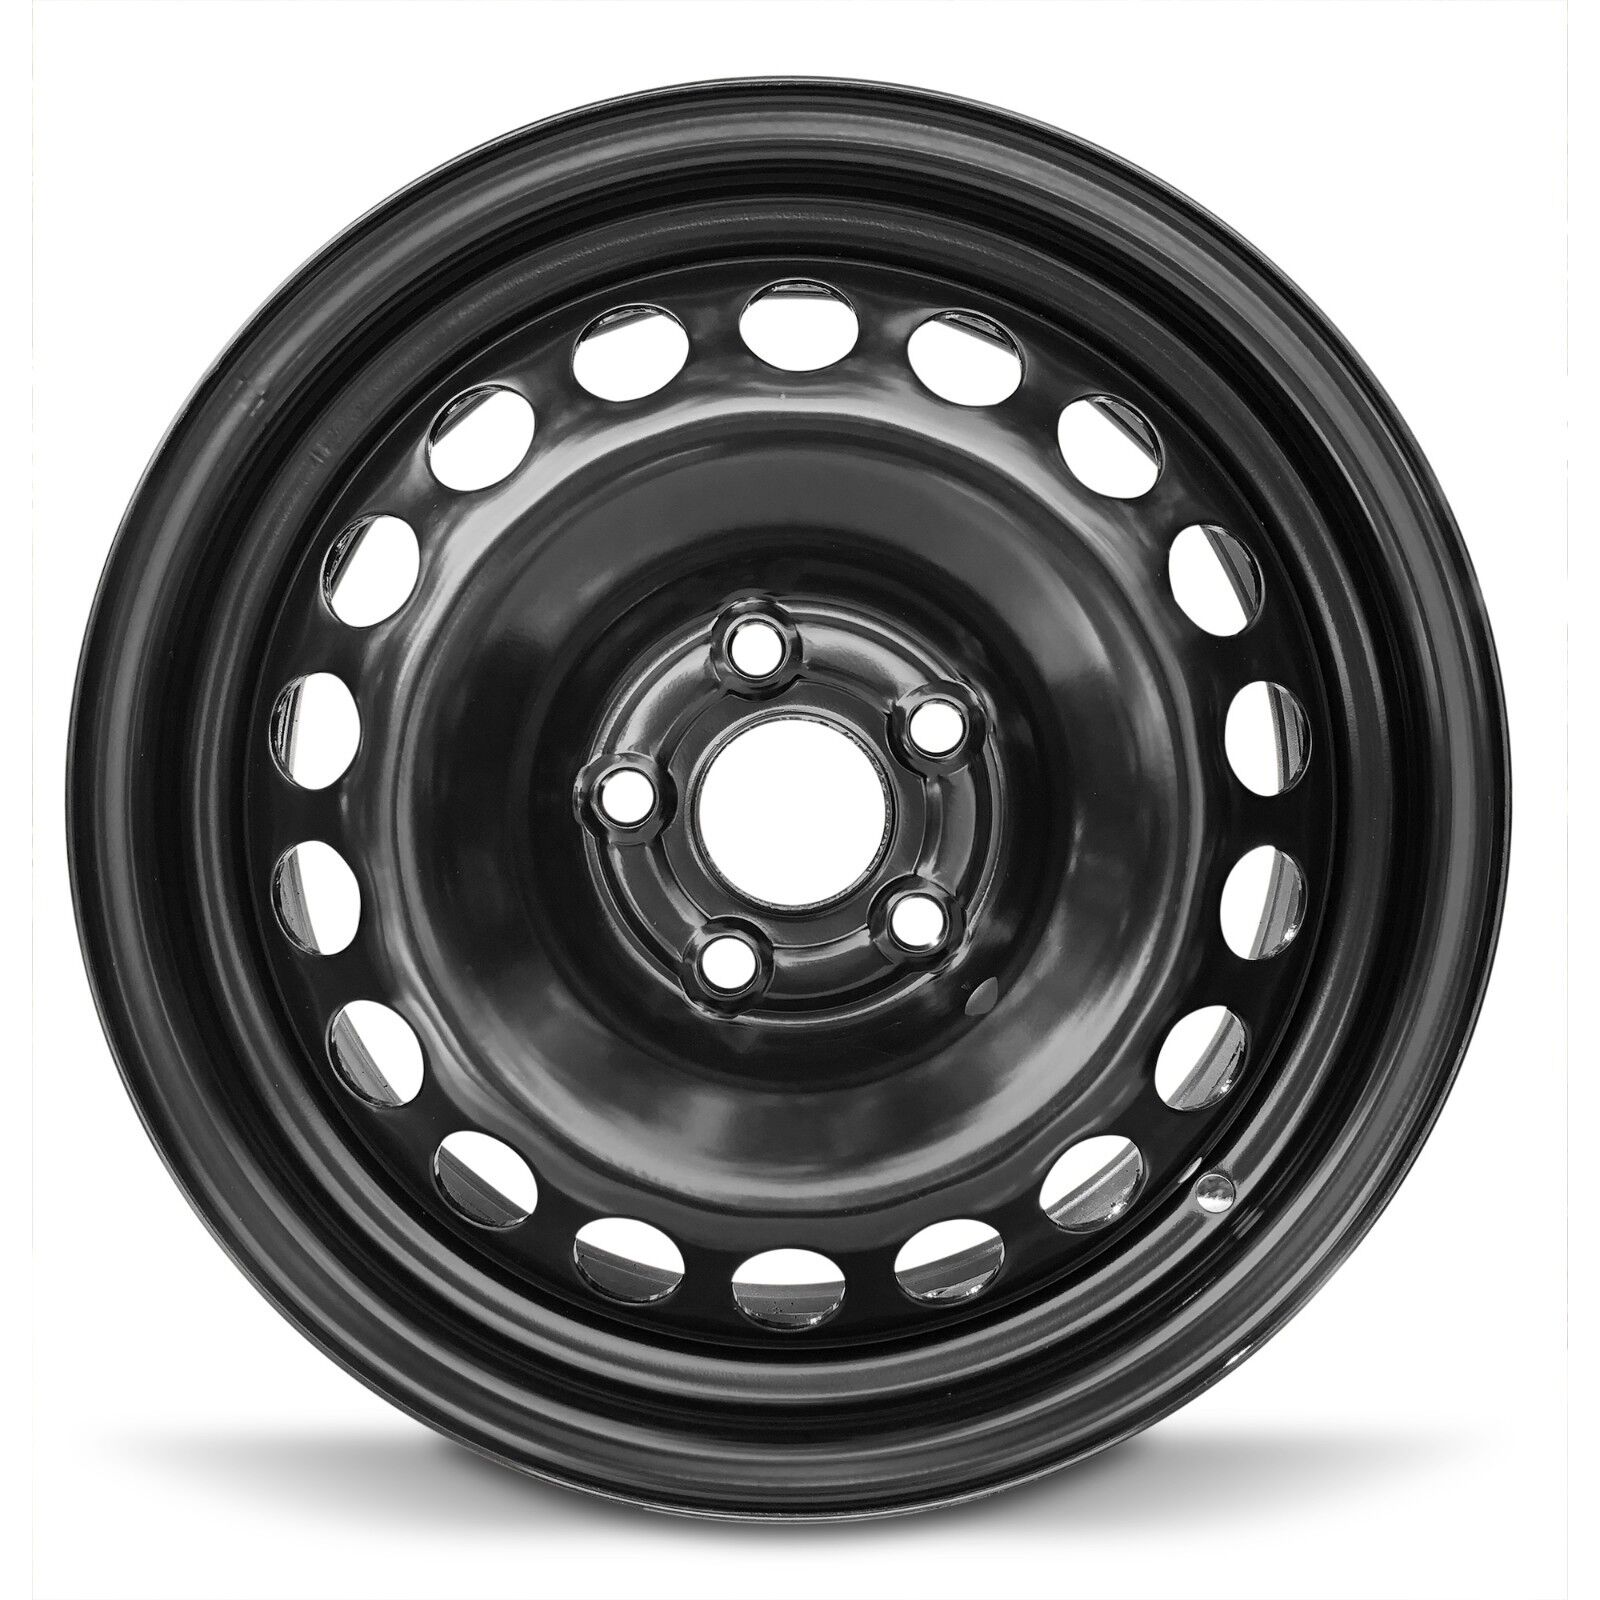 15 Inch Wheel for Chevrolet Cruze 2016-2019 New Steel Rim 15x6 in 5x105mm